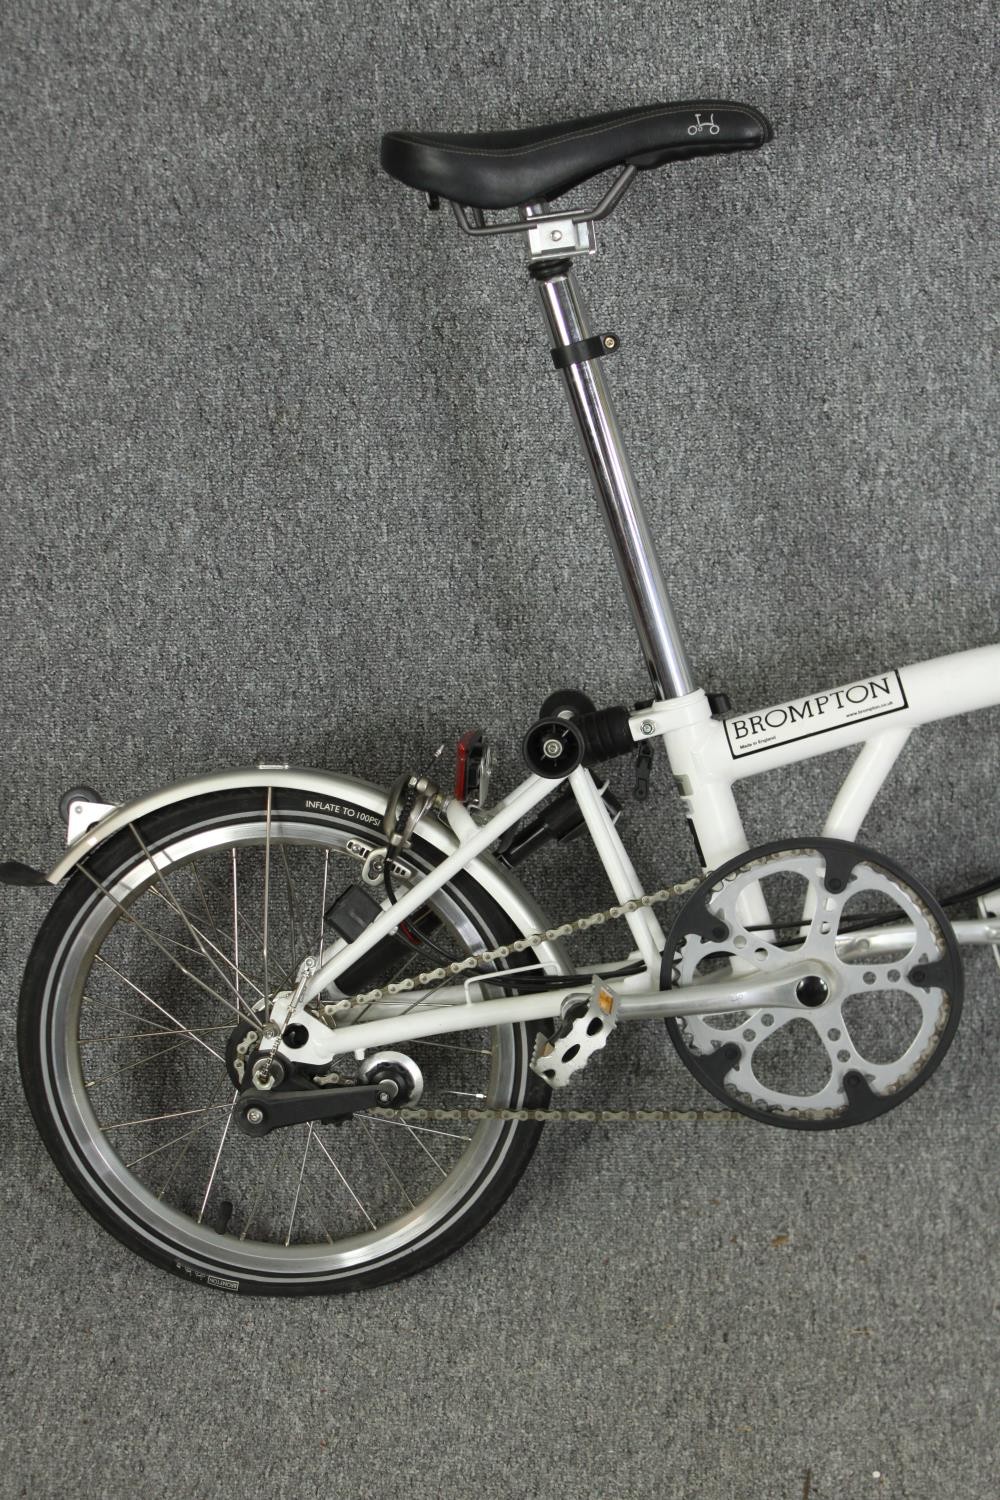 A Brompton folding bike, H.107 L.150cm. - Image 3 of 9